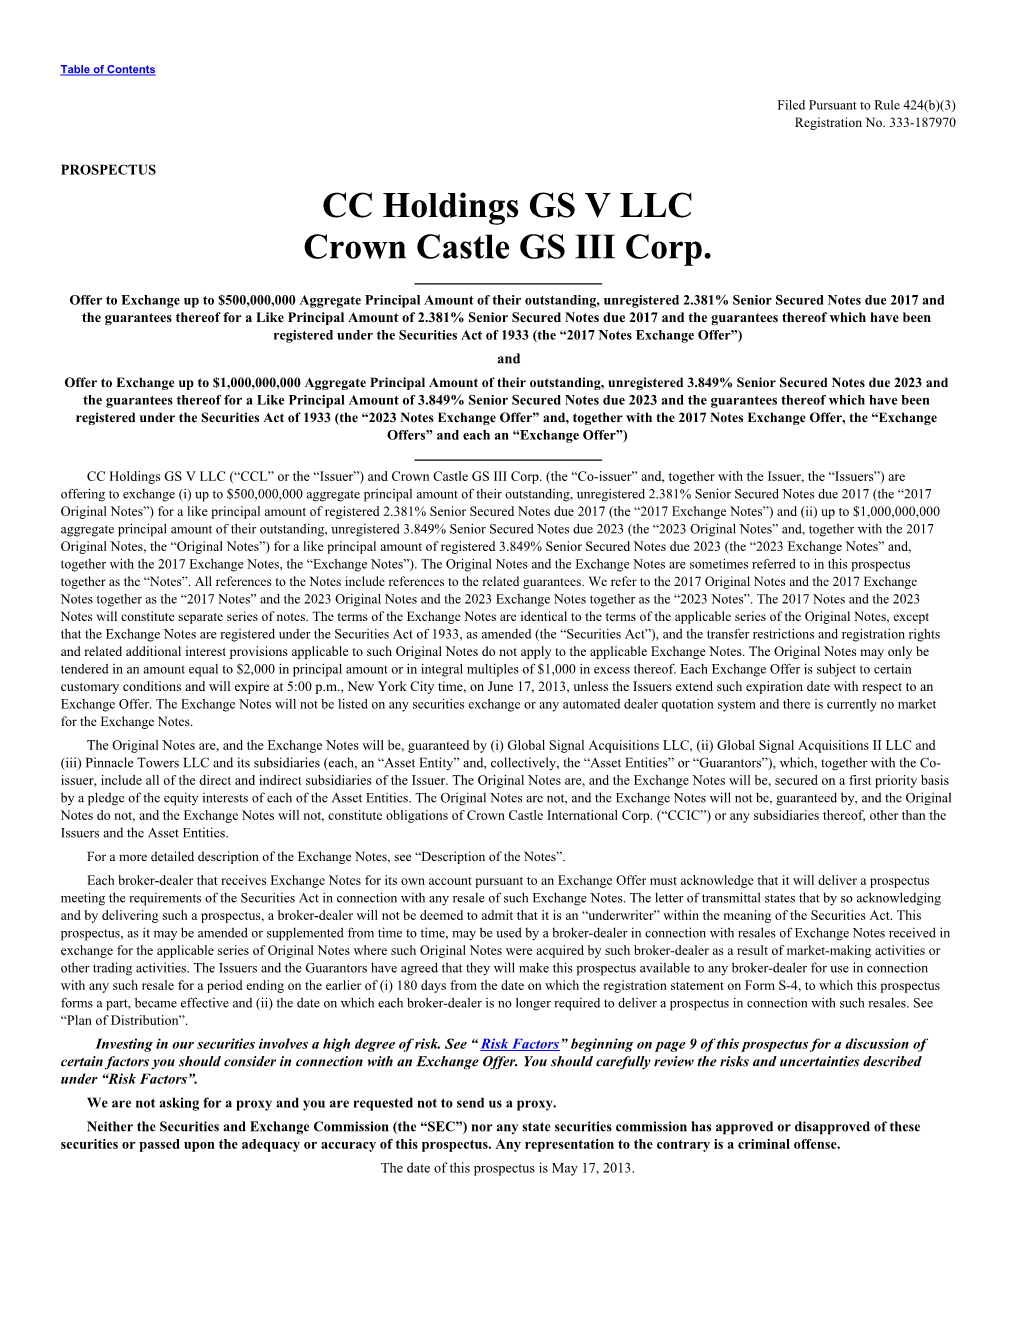 CC Holdings GS V LLC Crown Castle GS III Corp